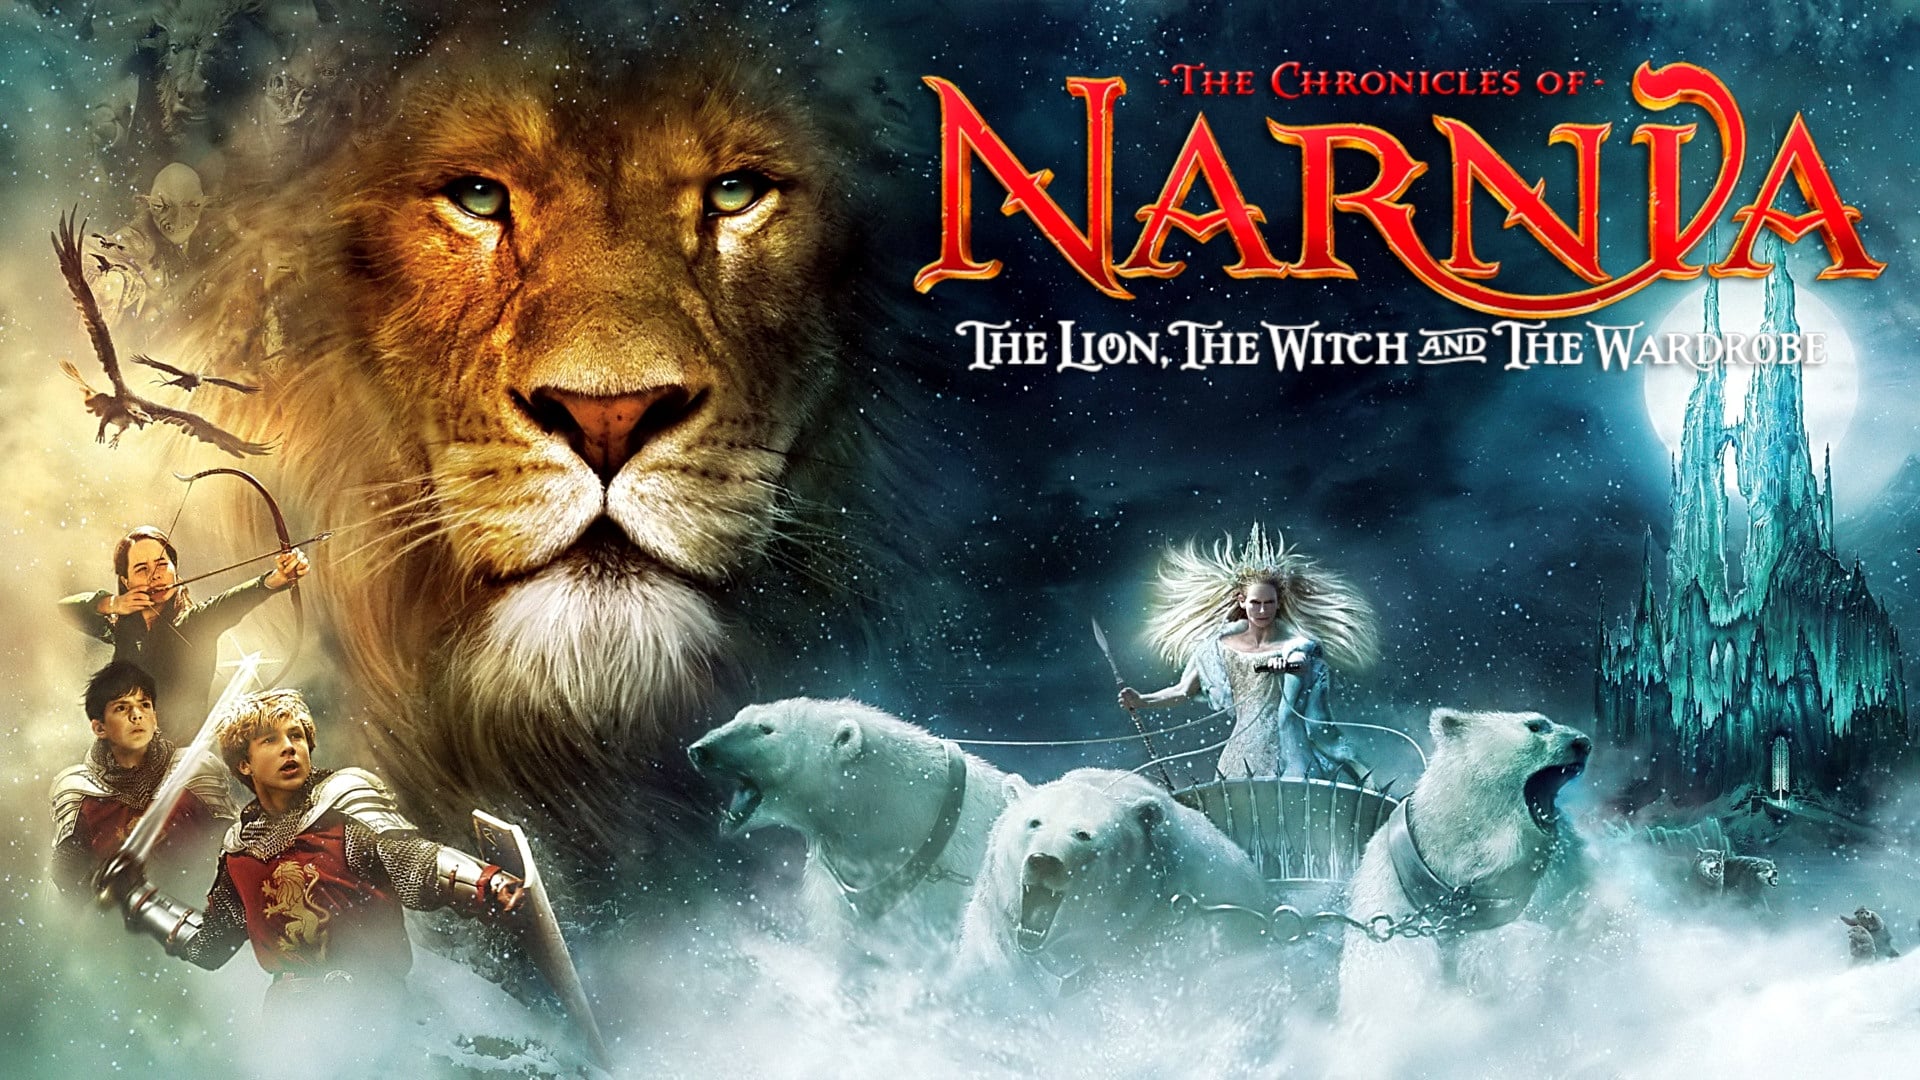 narnia 3 full movie in hindi free download utorrent for ipad